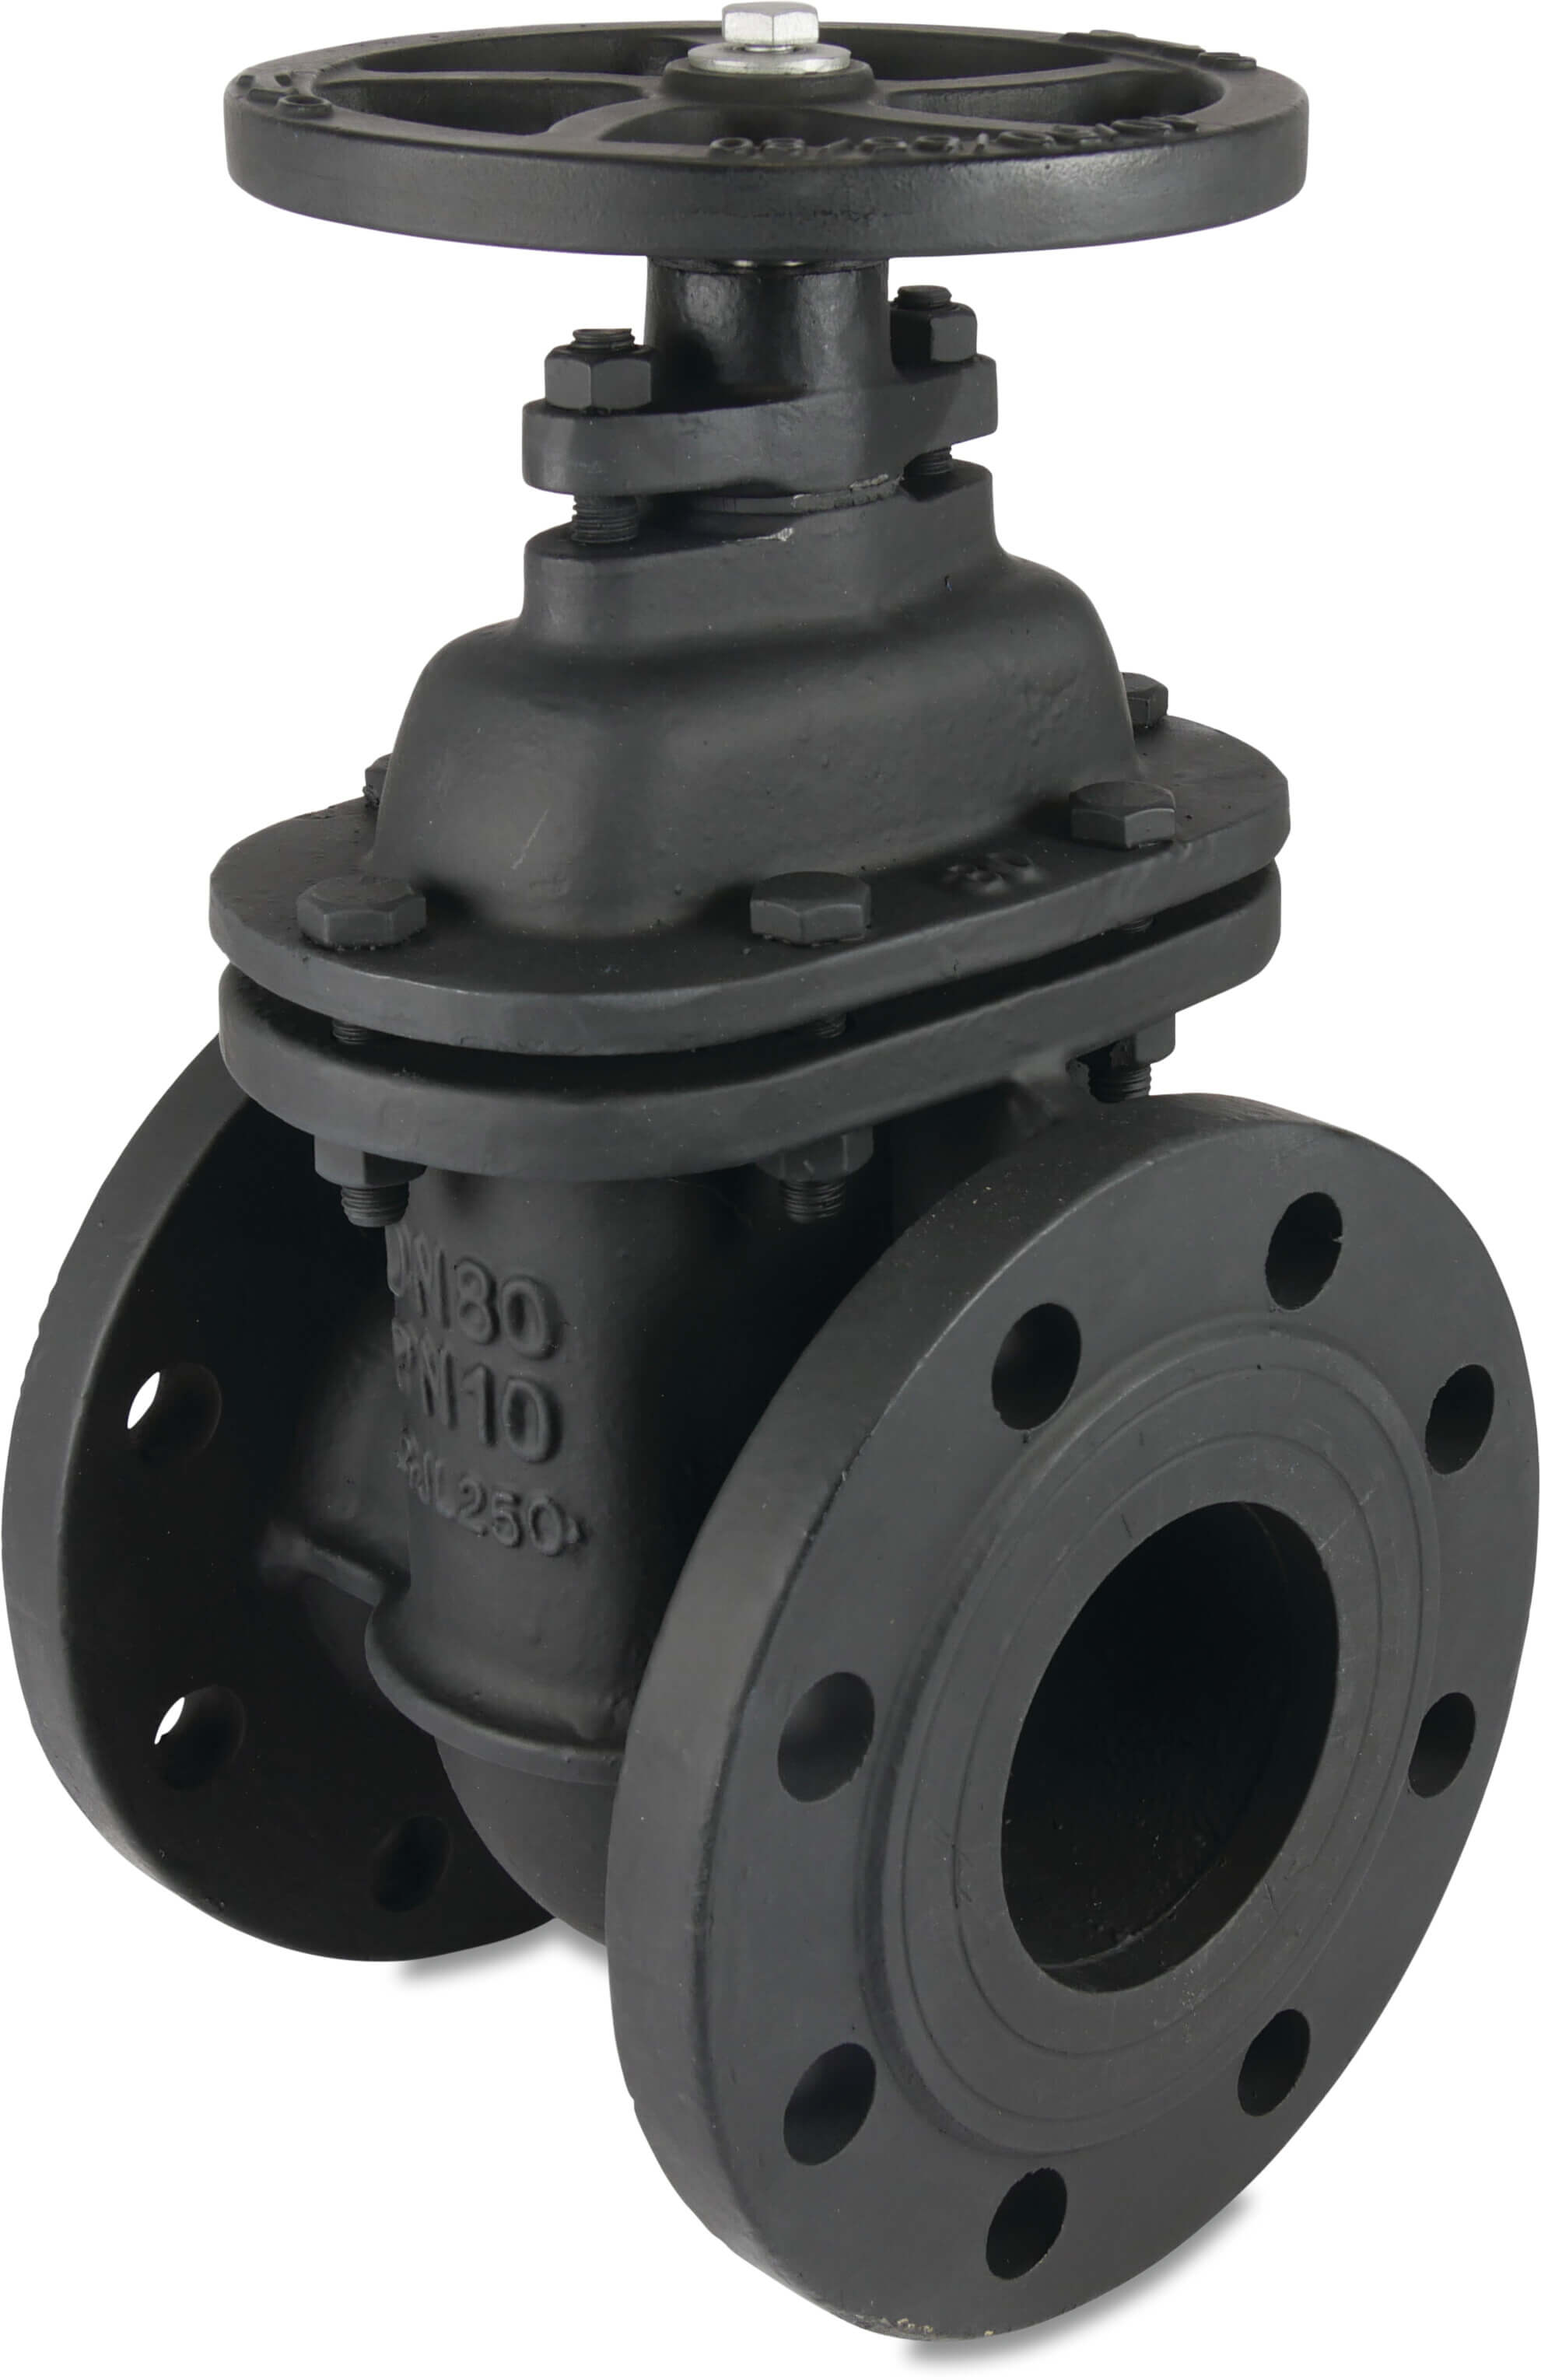 Profec Gate valve cast iron GG 25 powder coated DN40 DIN flange 10bar black PN10/16 type 200/N